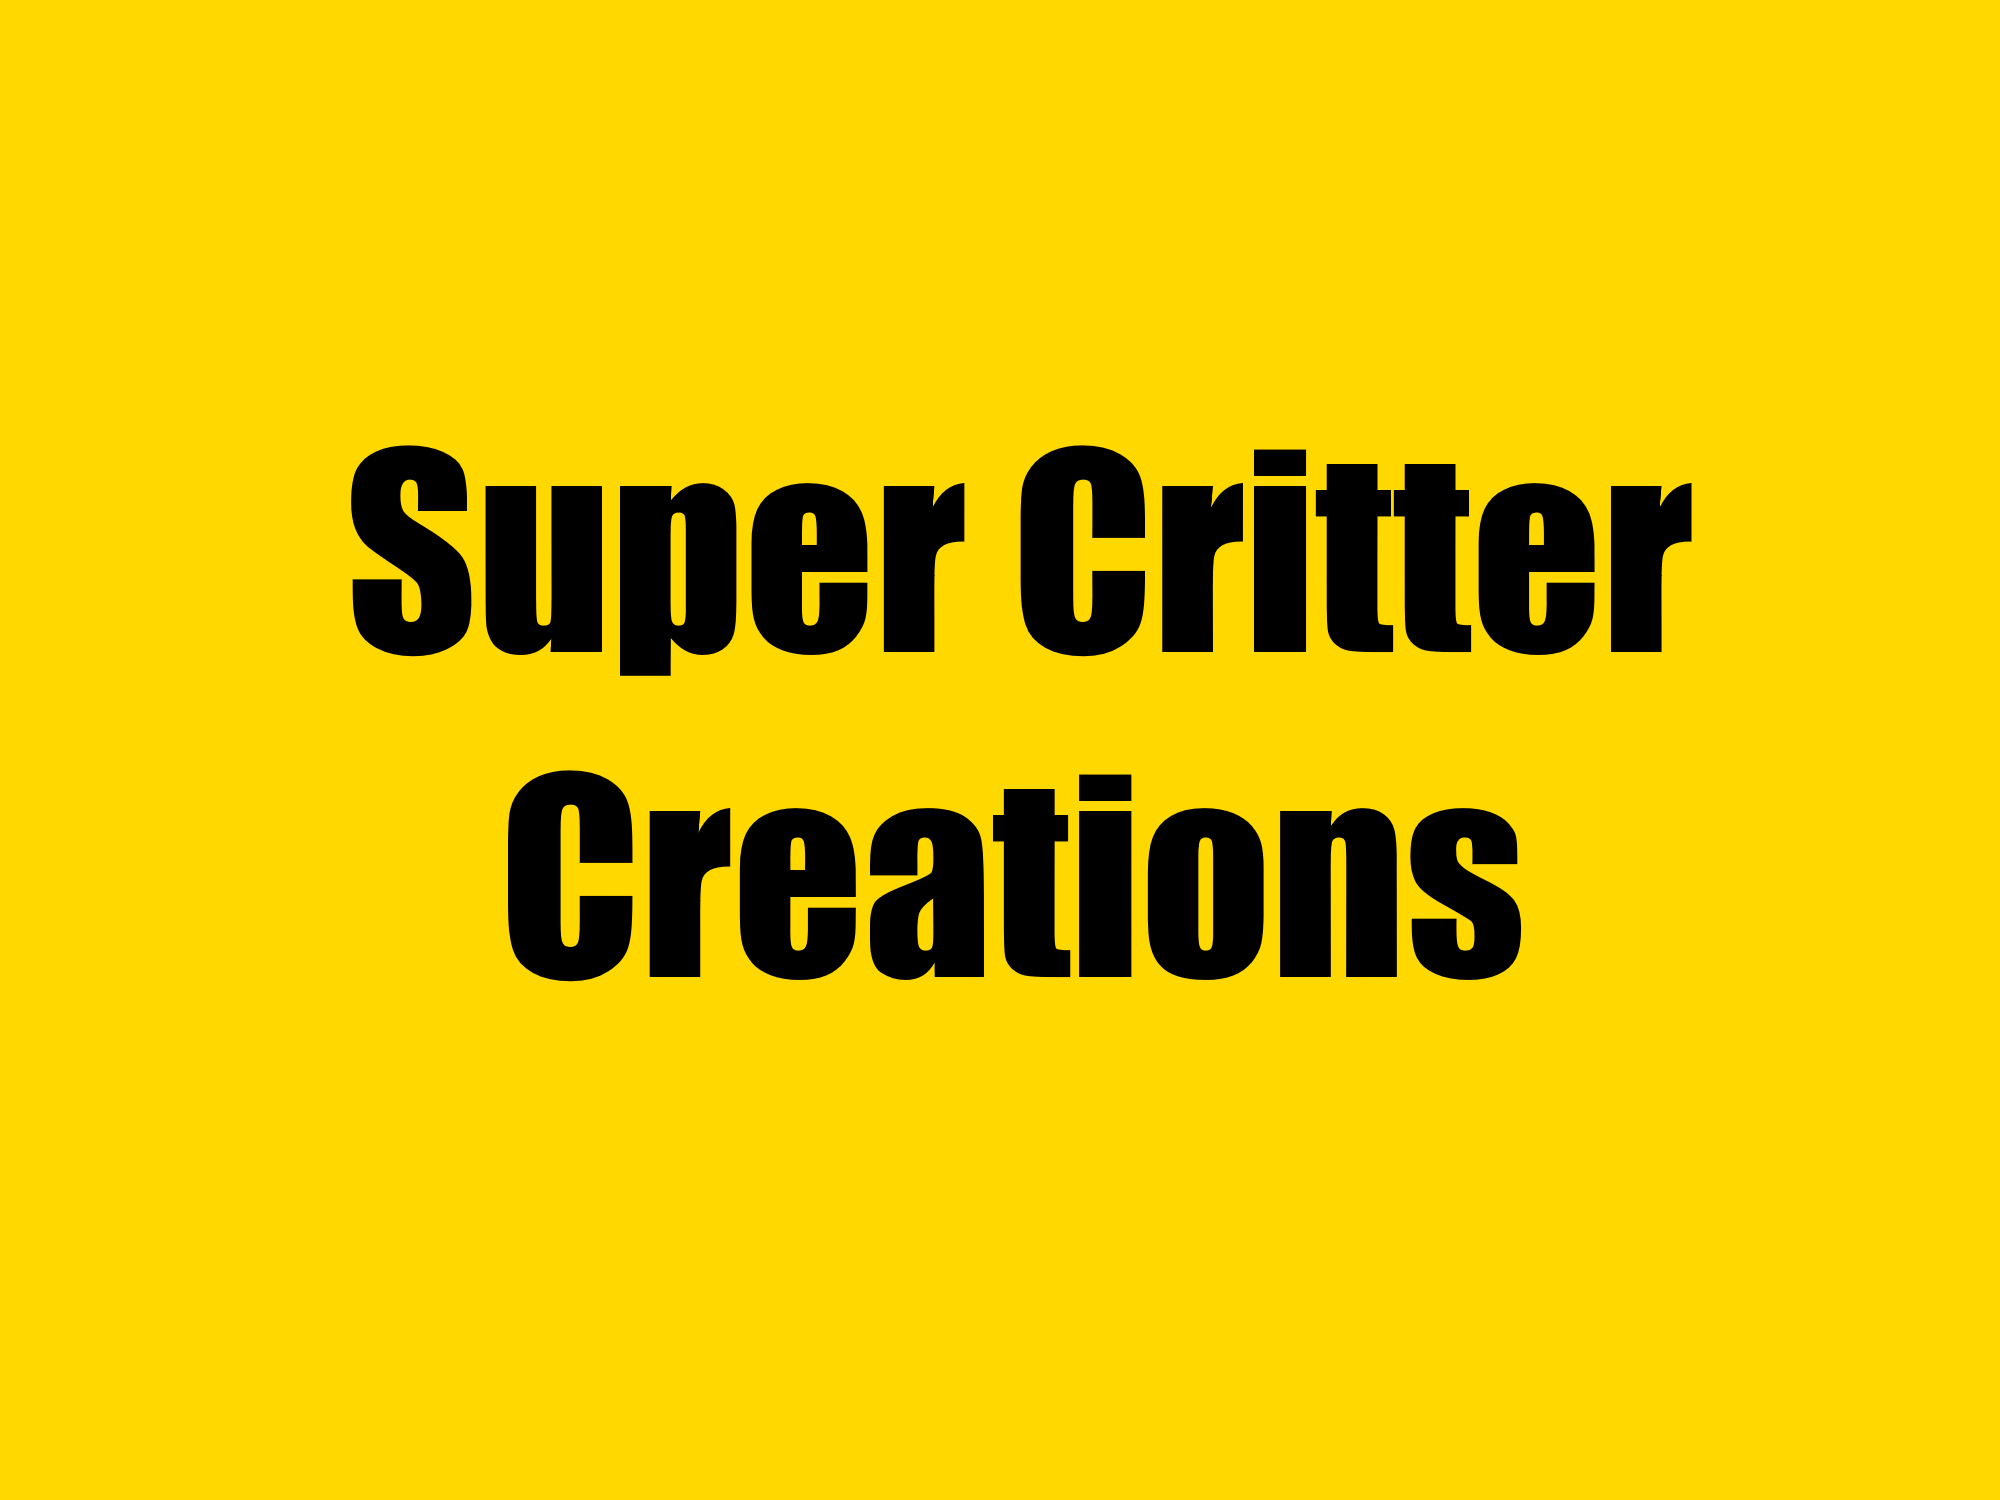 Super Critter Creations